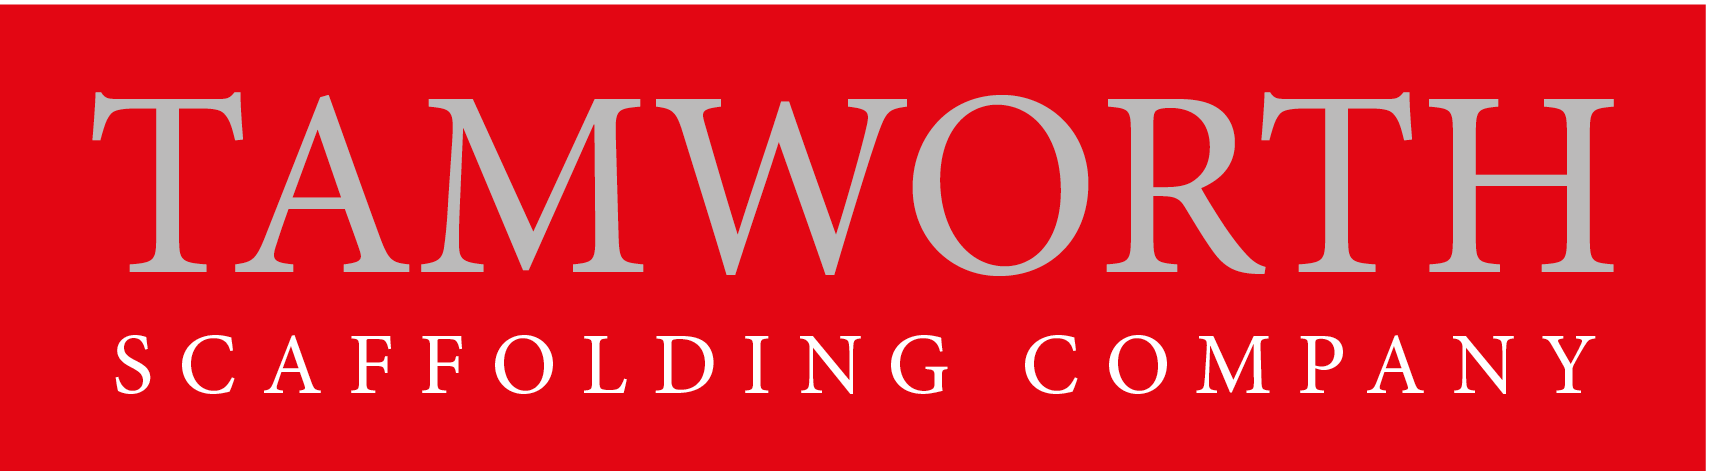 Tamworth Scaffolding Company